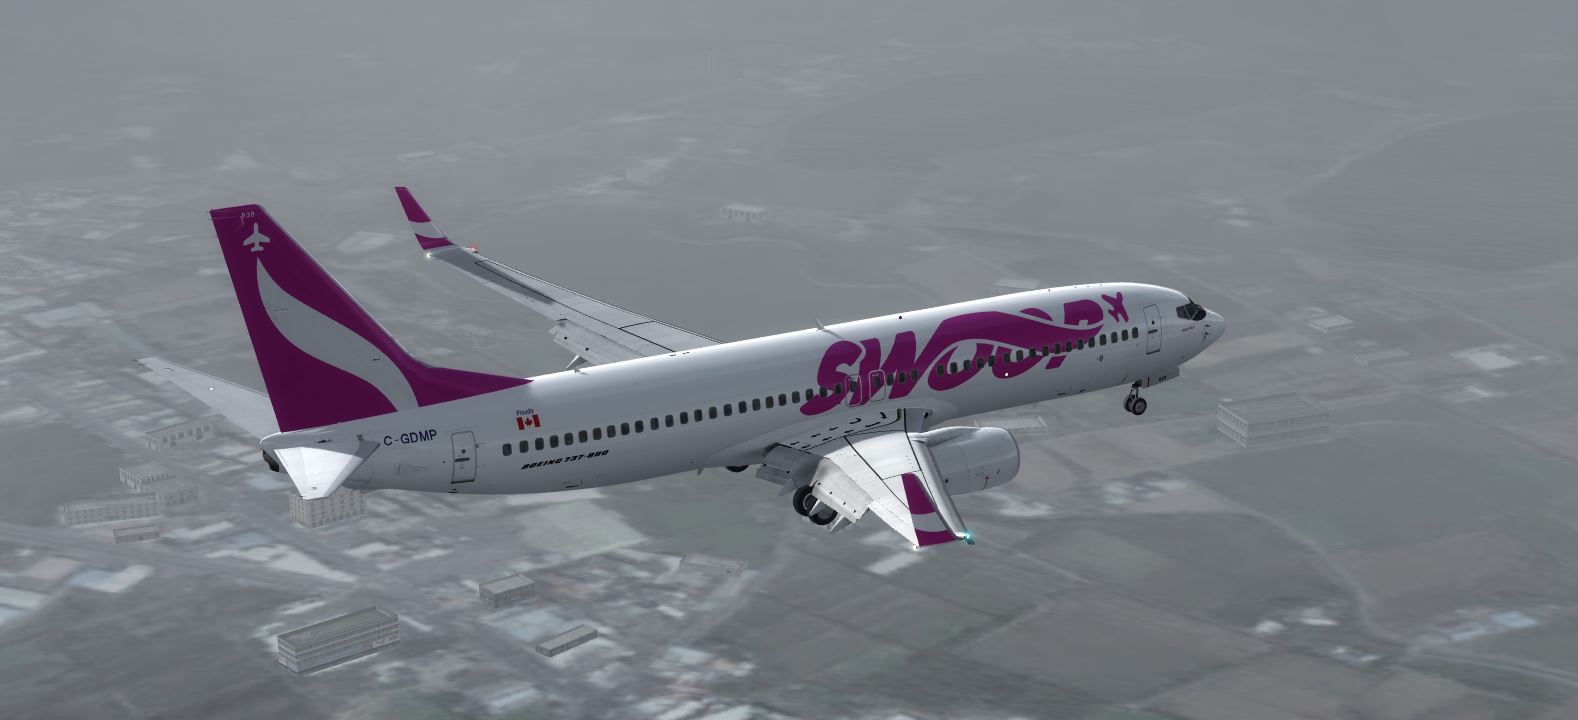 B737-800 Swoop Airlines-5299 